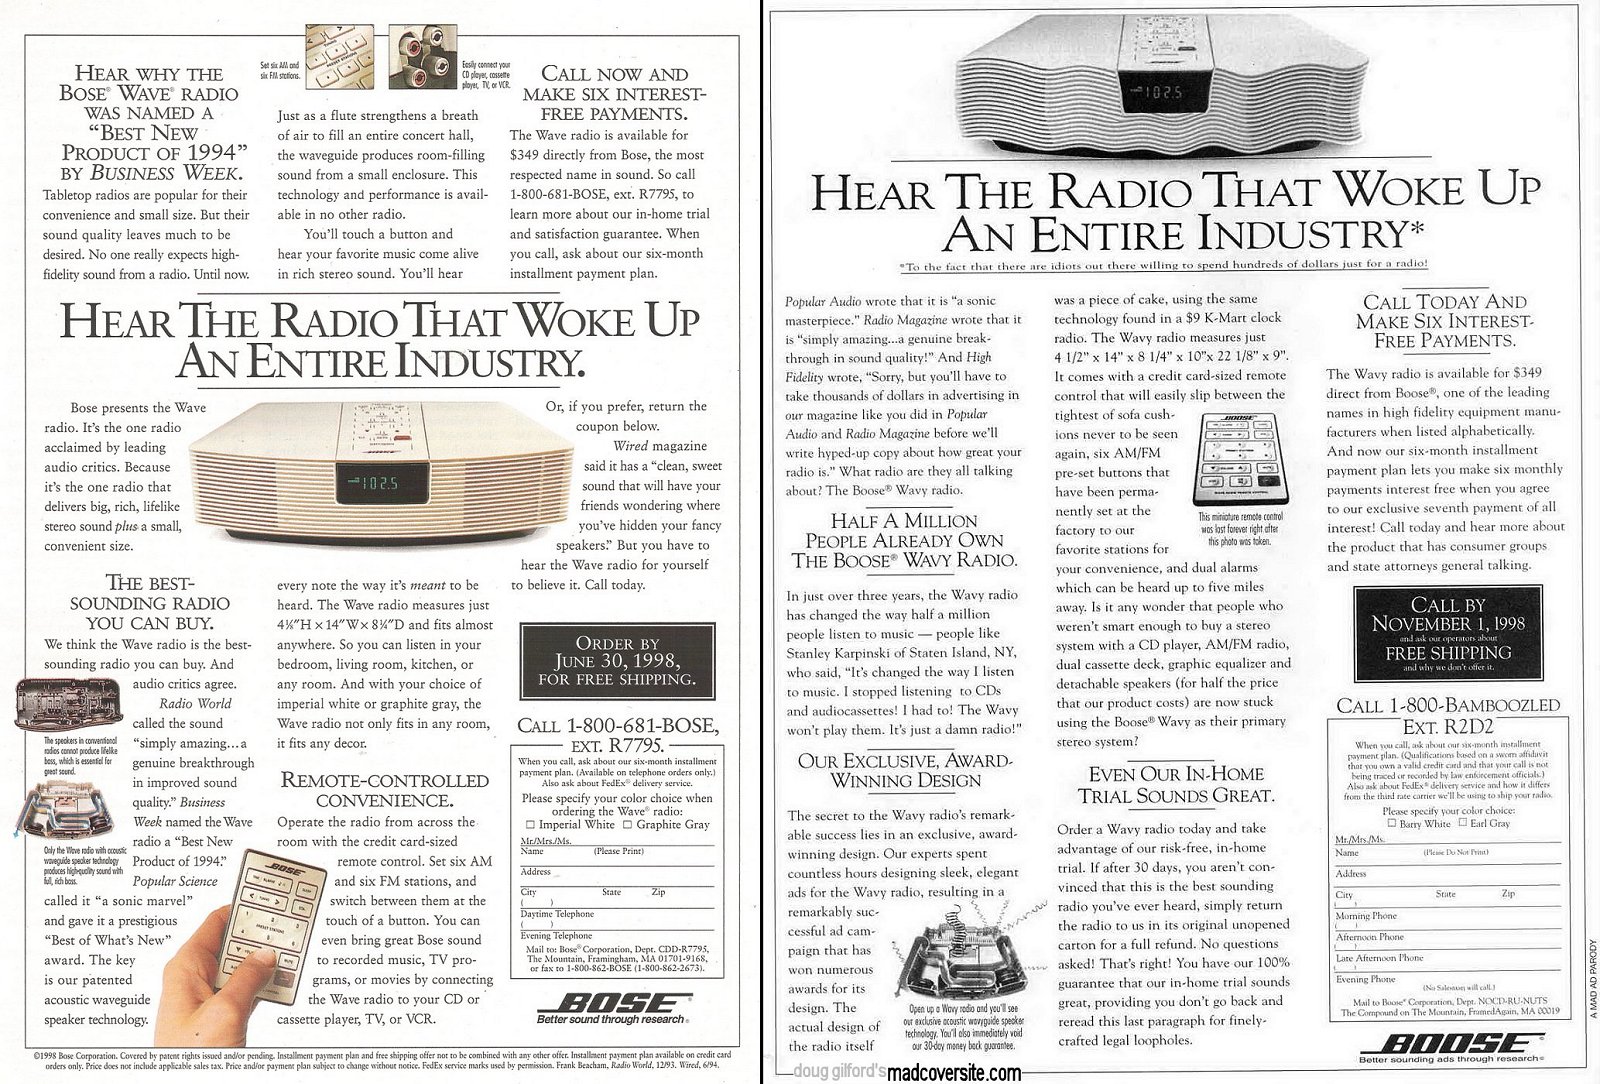 The Bose Wave Radio ad